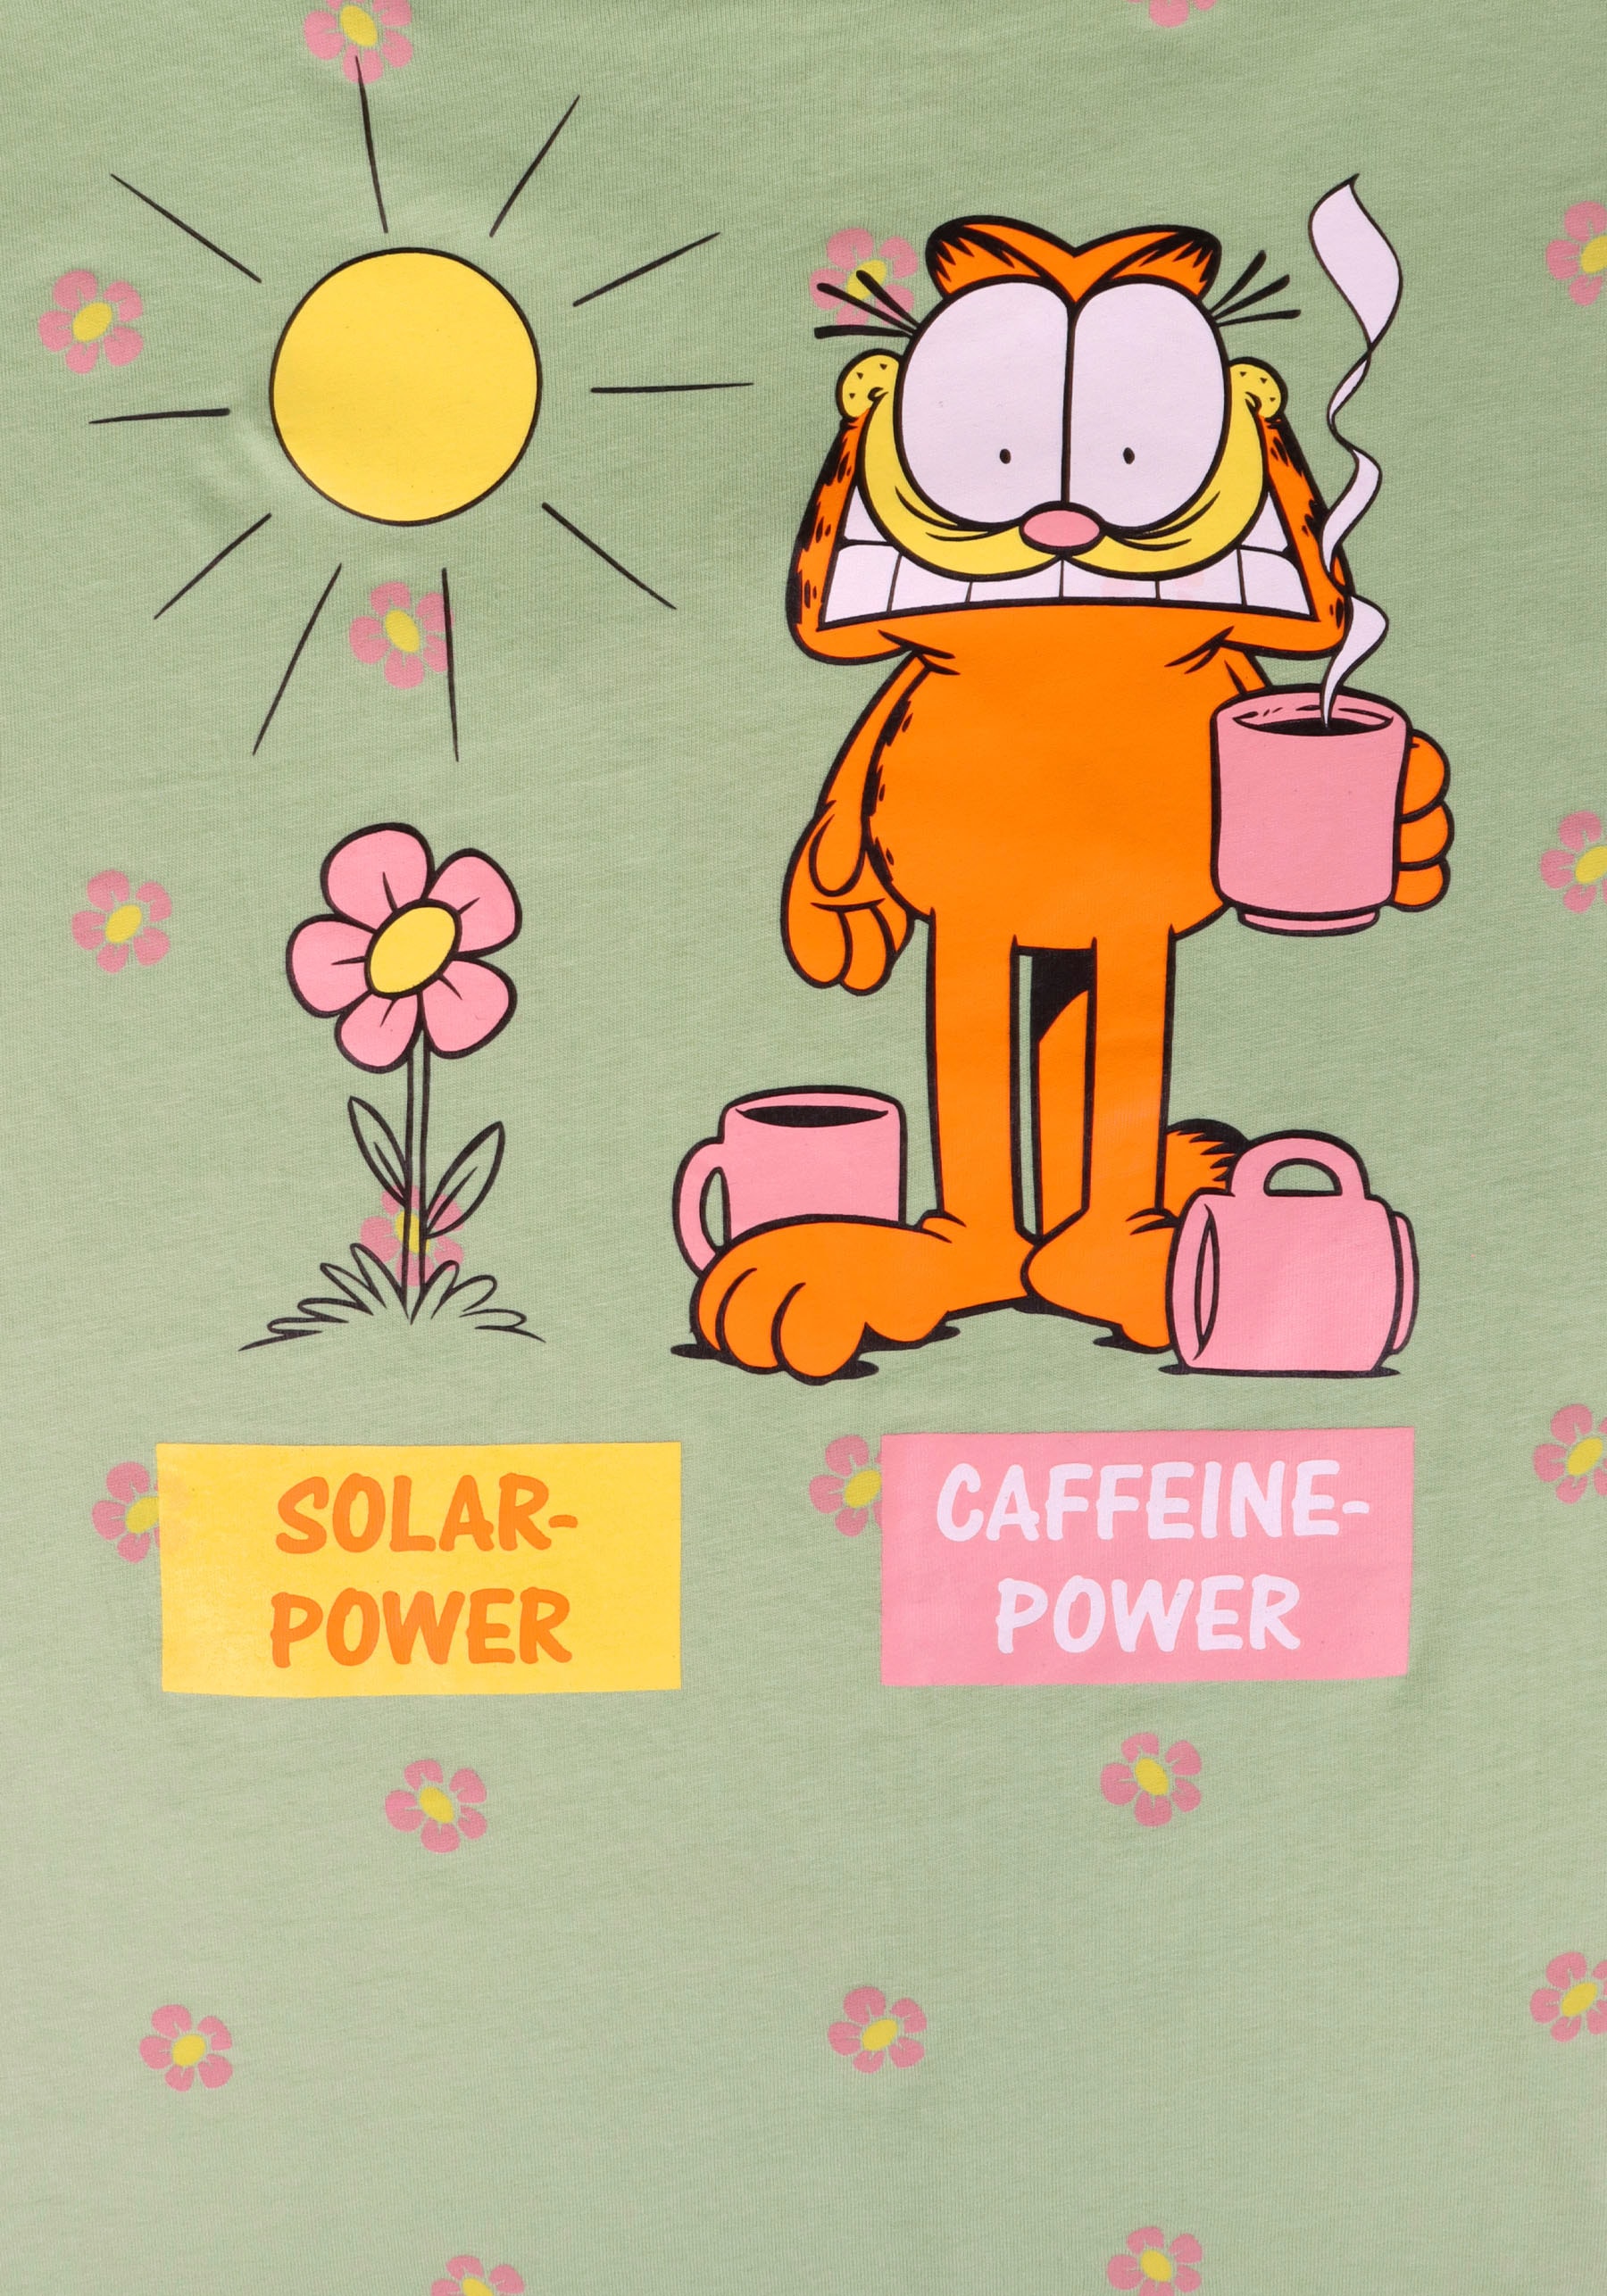 Capelli New York T-Shirt, mit Garfield Rückendruck Solar Power vs. Caffeine ower